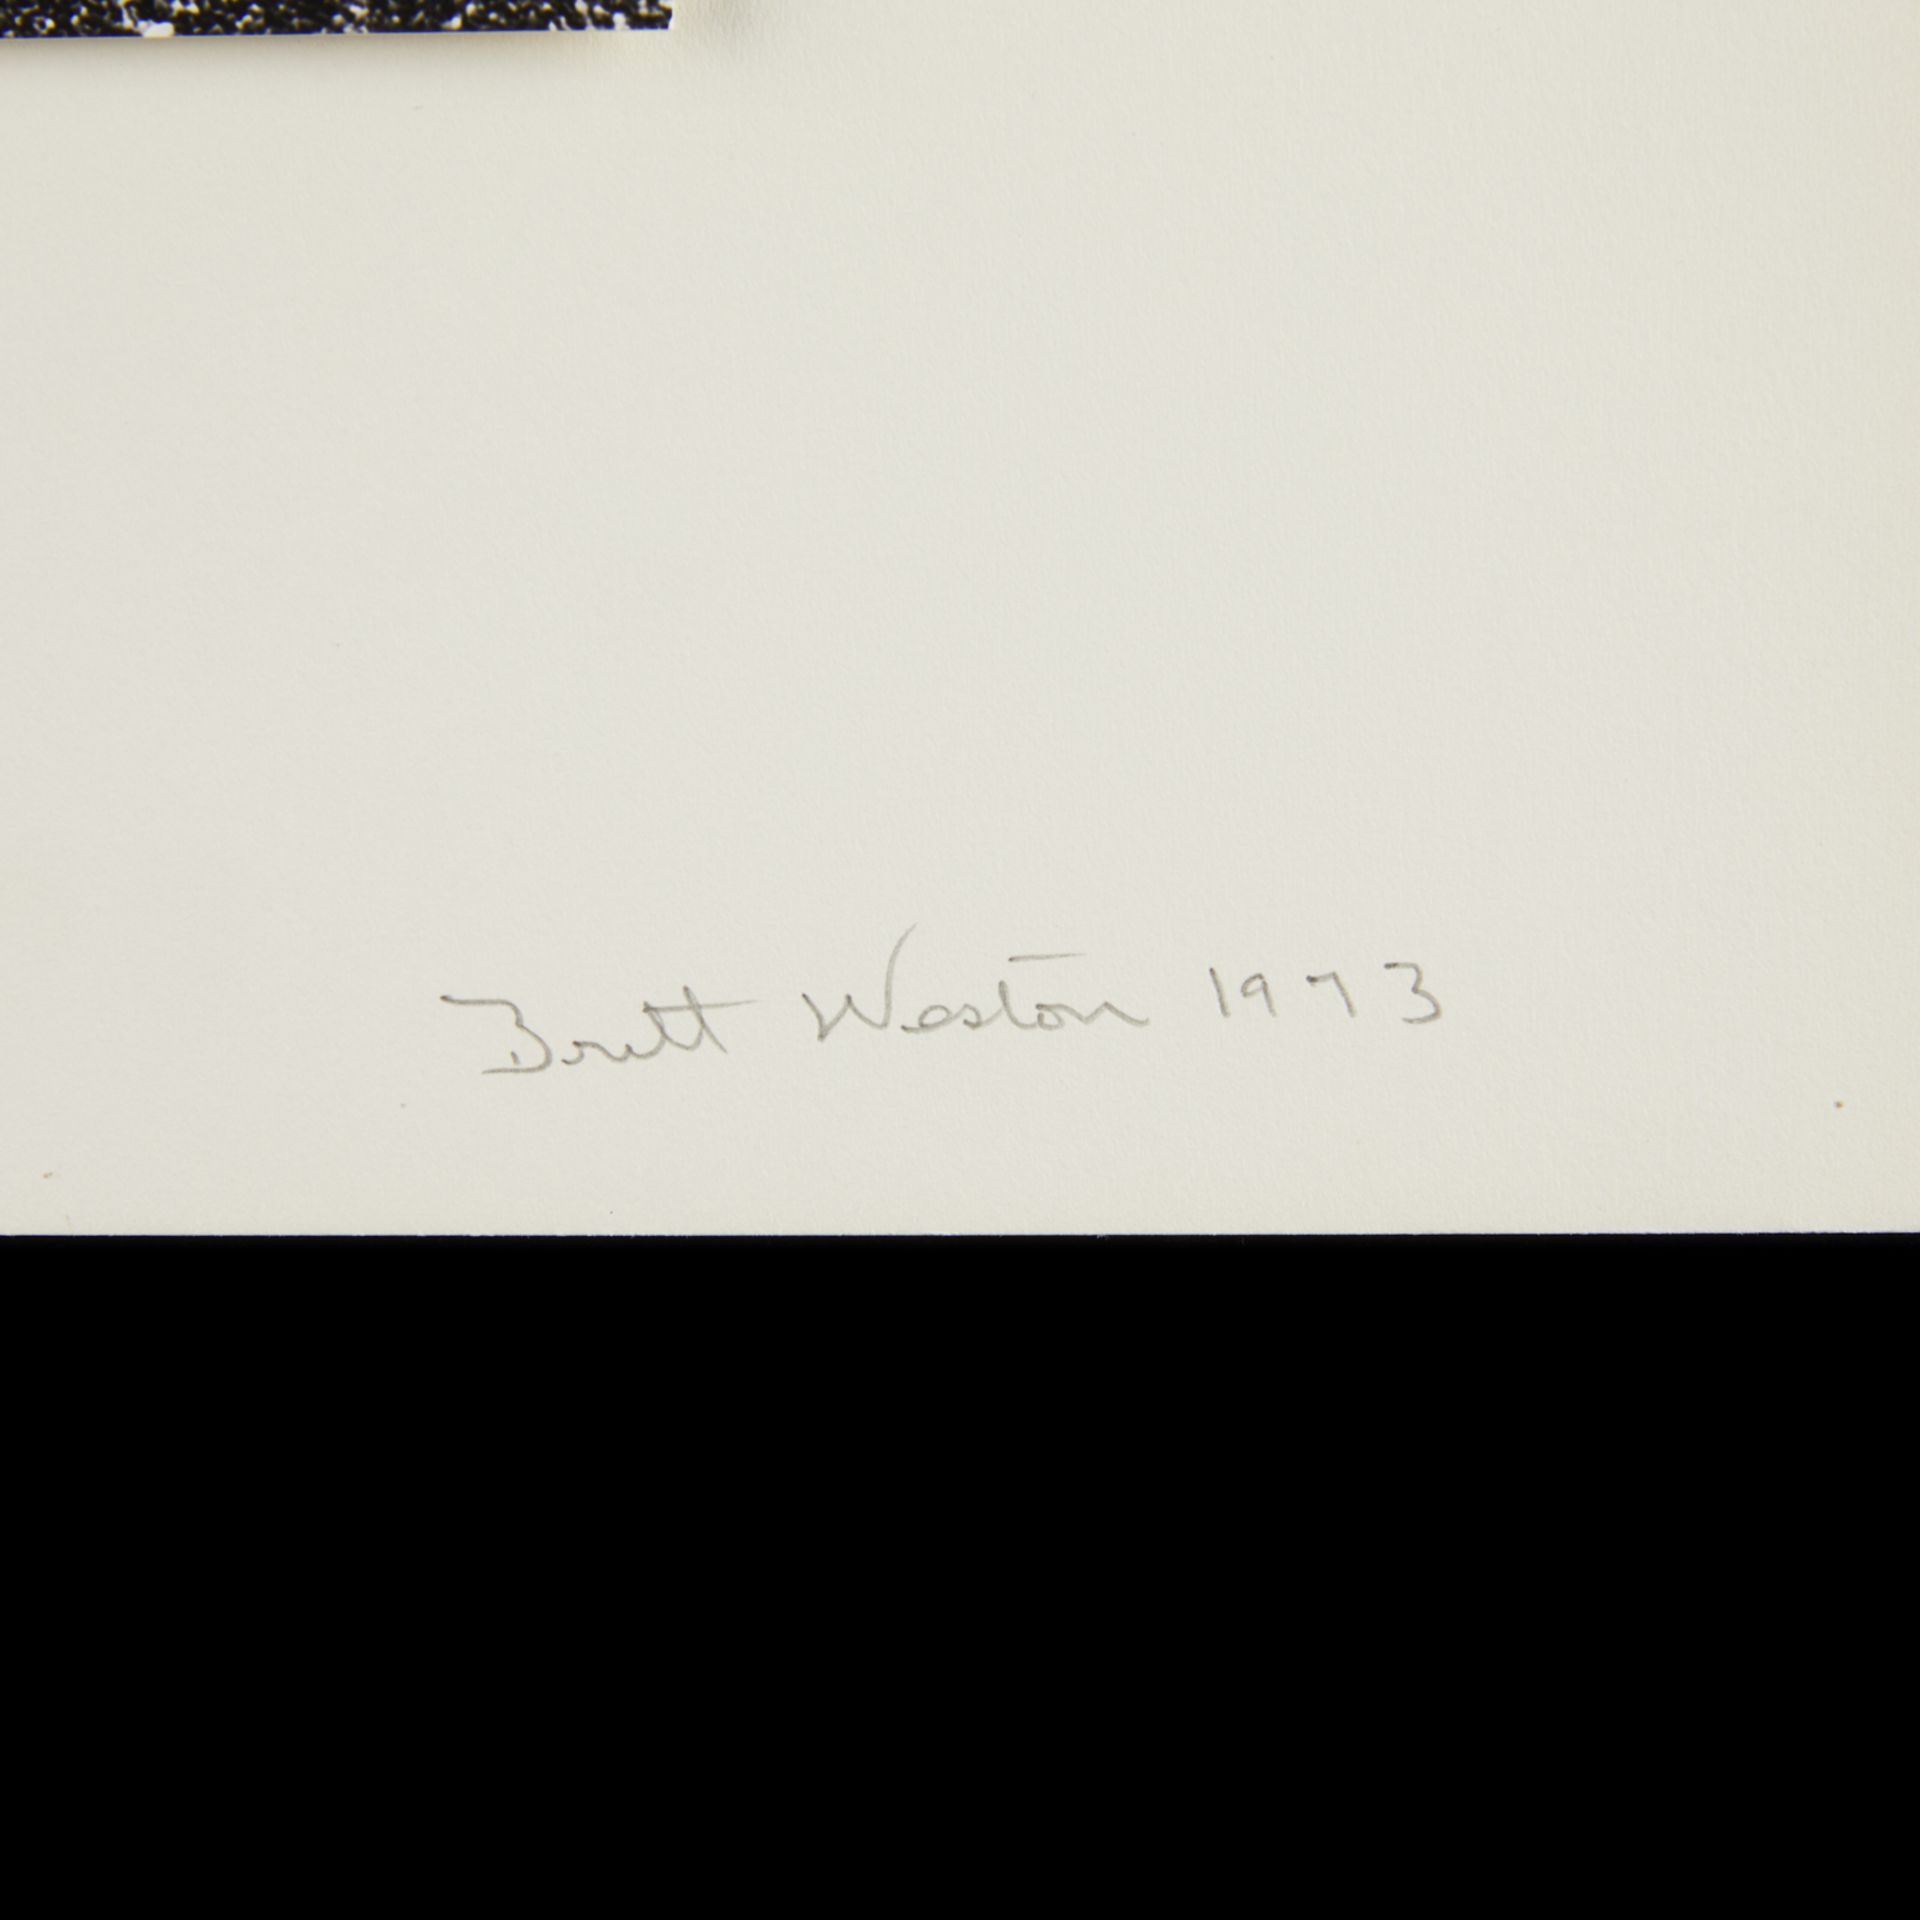 Brett Weston "Oregon" GSP Photo 1973 - Image 5 of 5